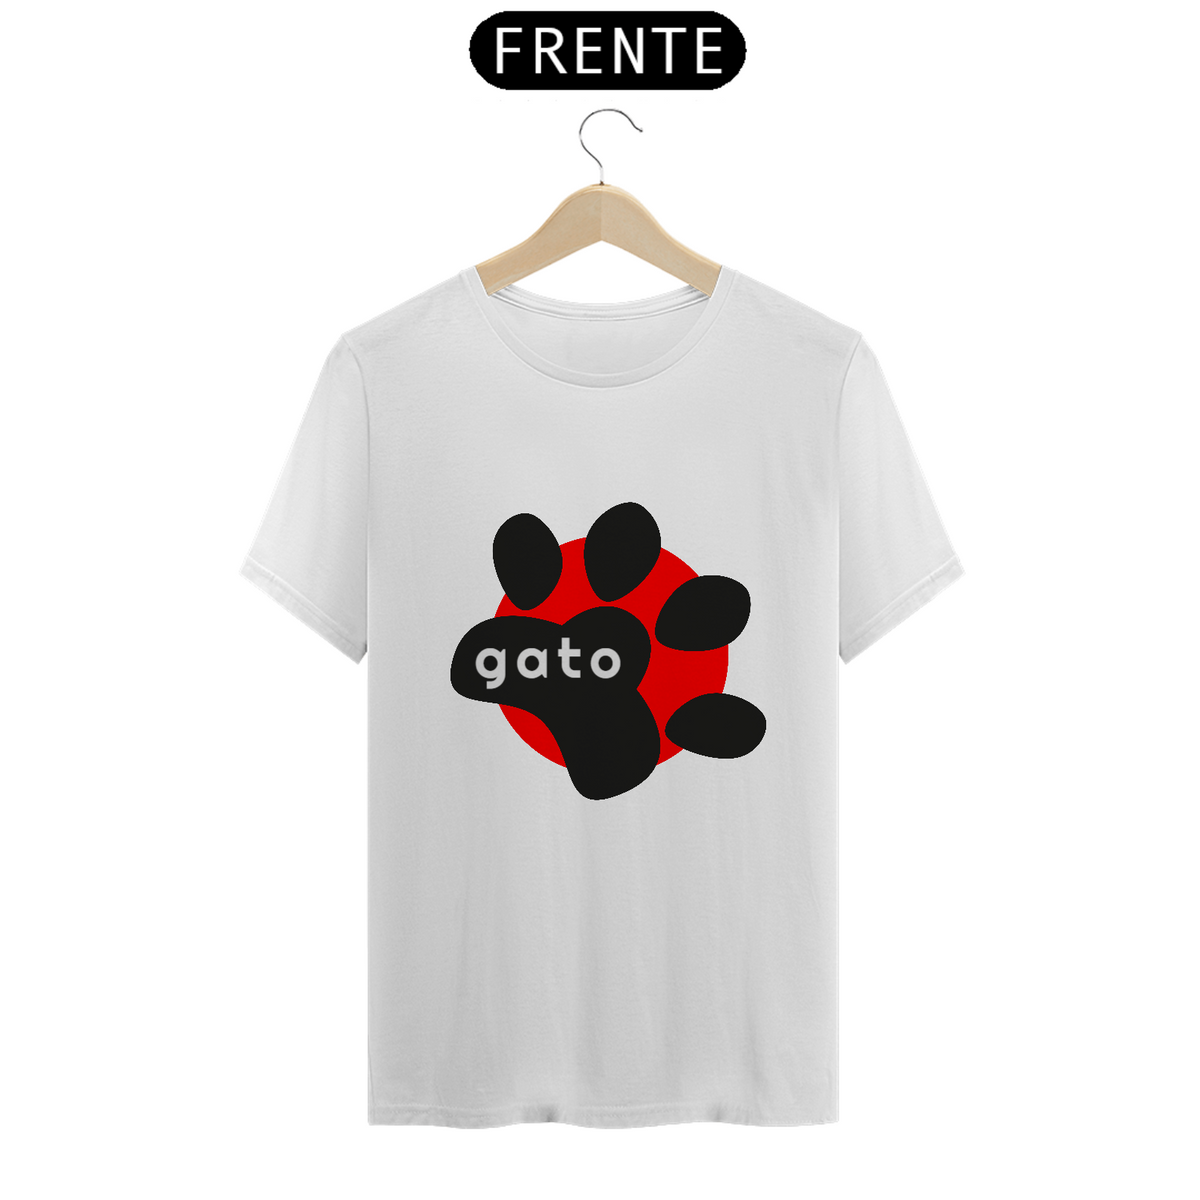 Nome do produto: T-Shirt Classic - Pata de gato - cores claras